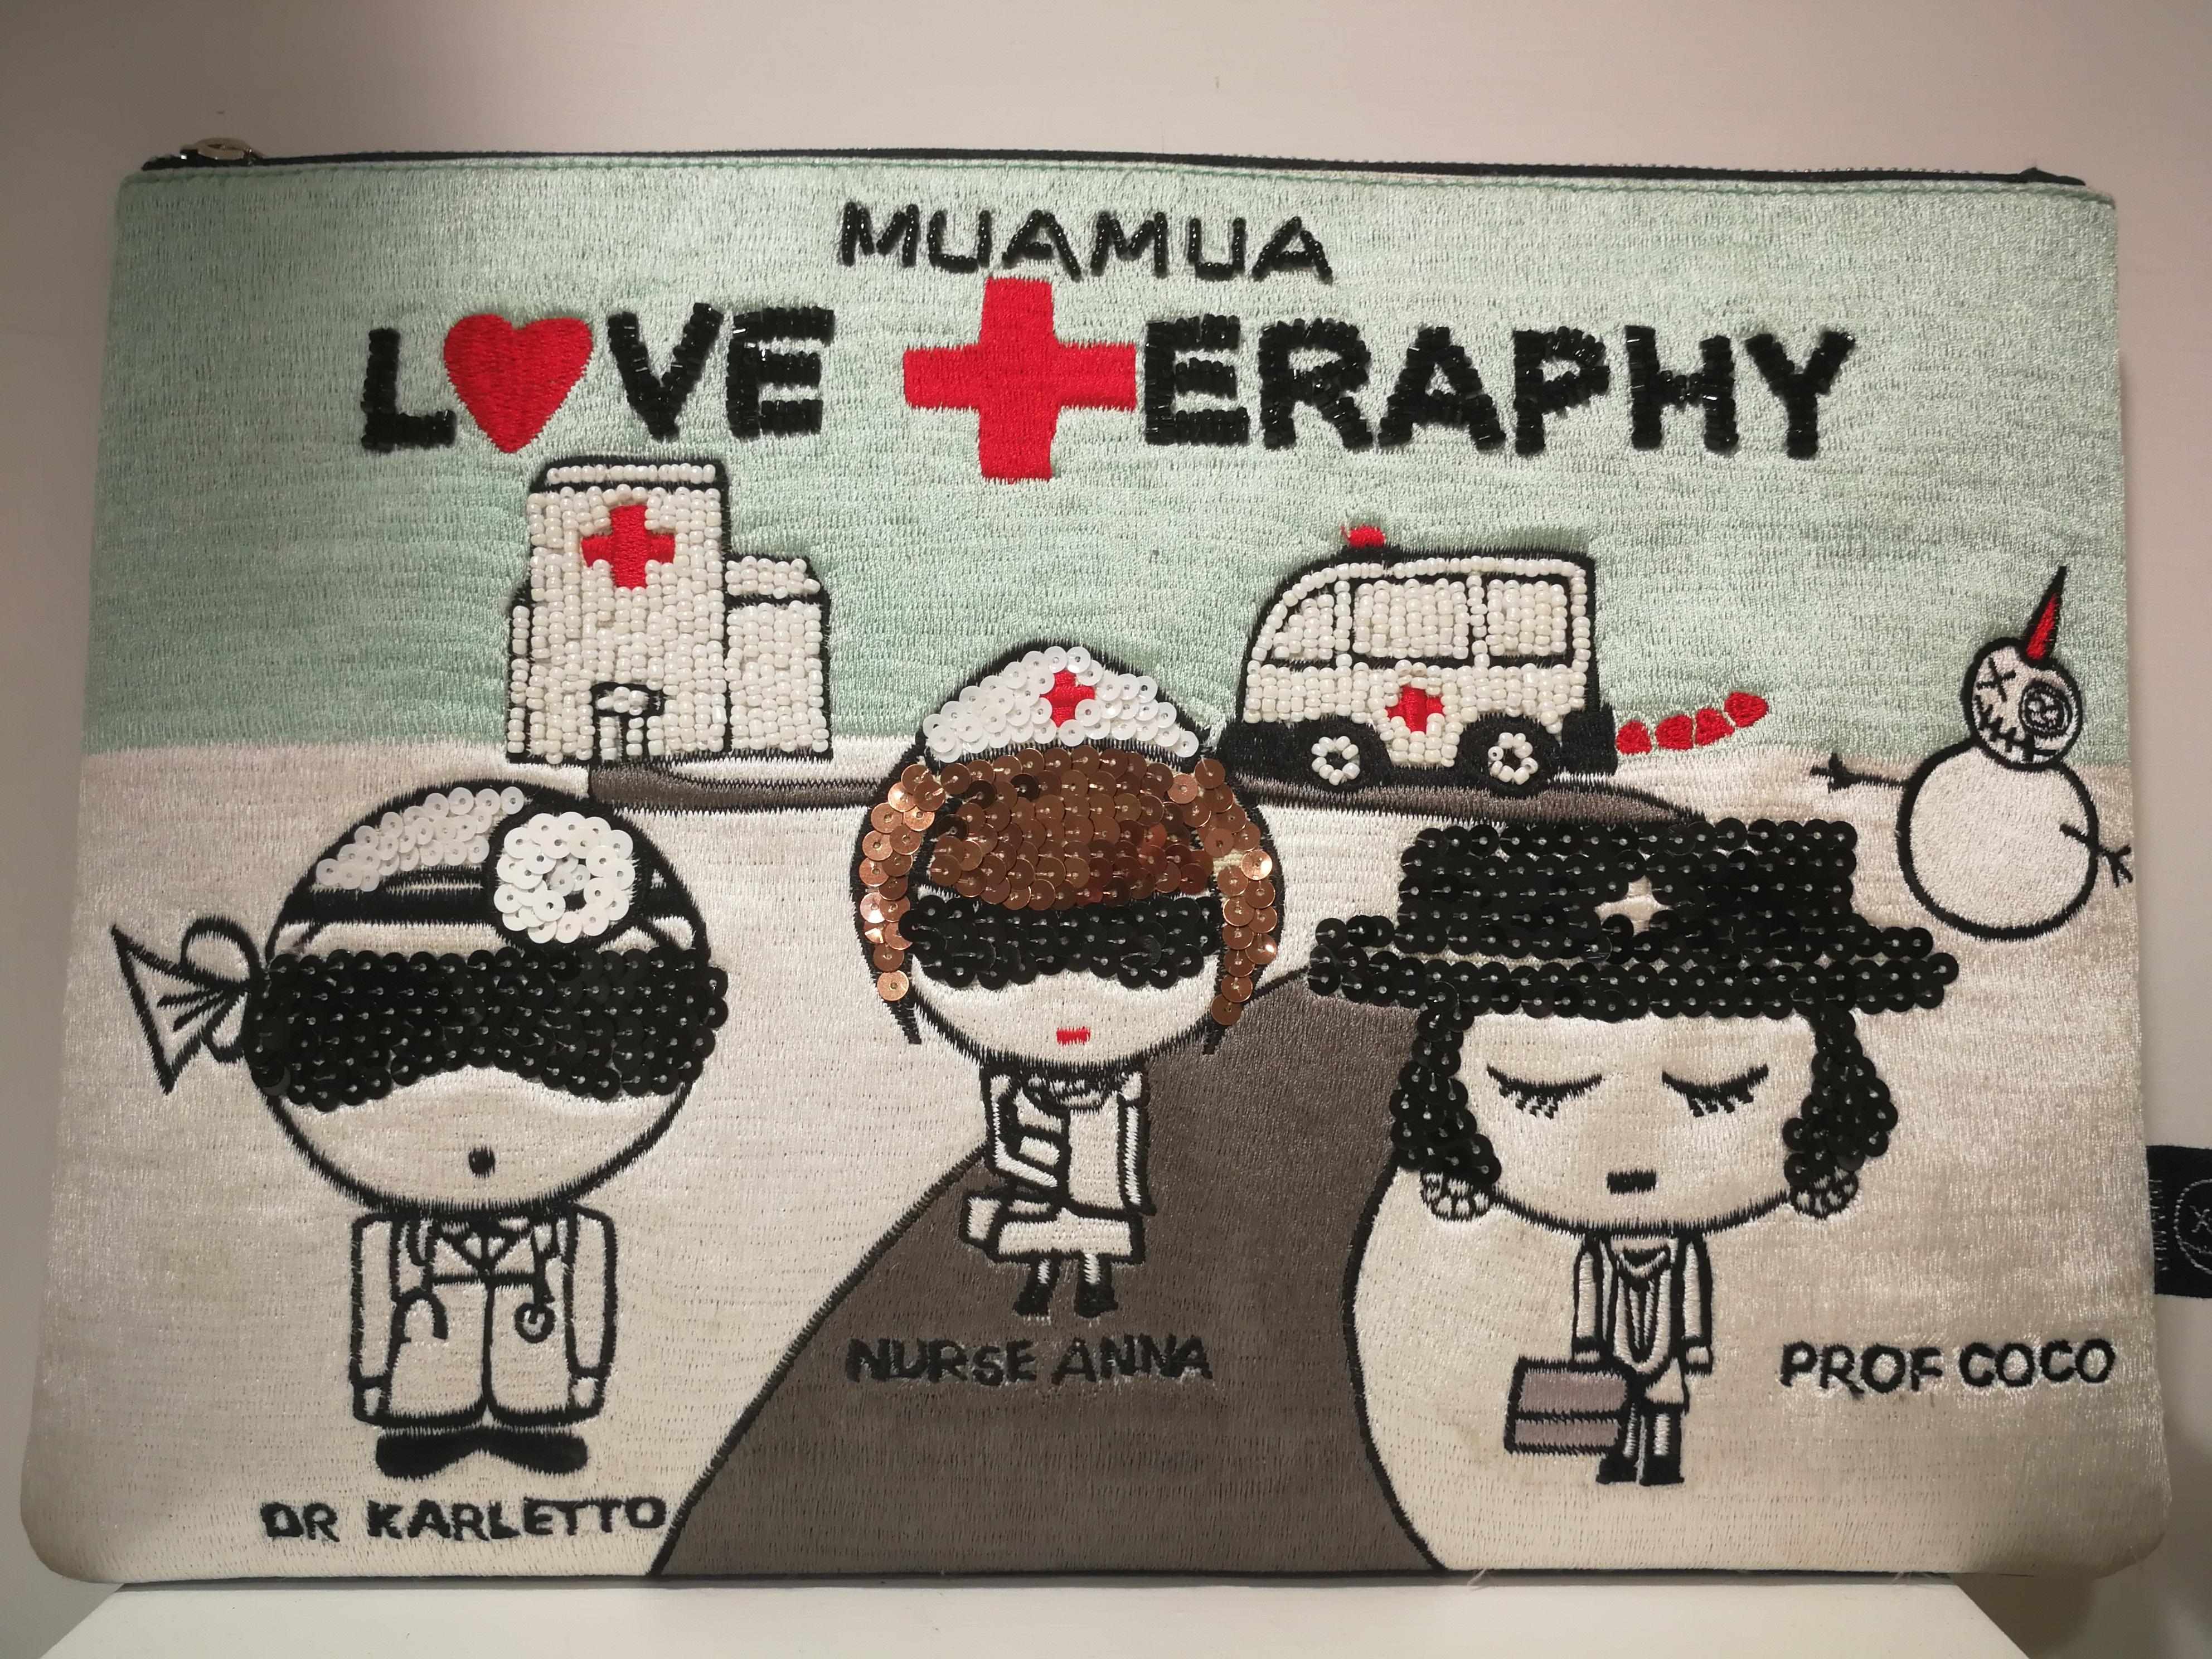 Mua Mua Love Therapy Zip Pochette
Big handle pochette by Mua Mua Dolls
Love therapy 
Measurements: 23 x 35 cm